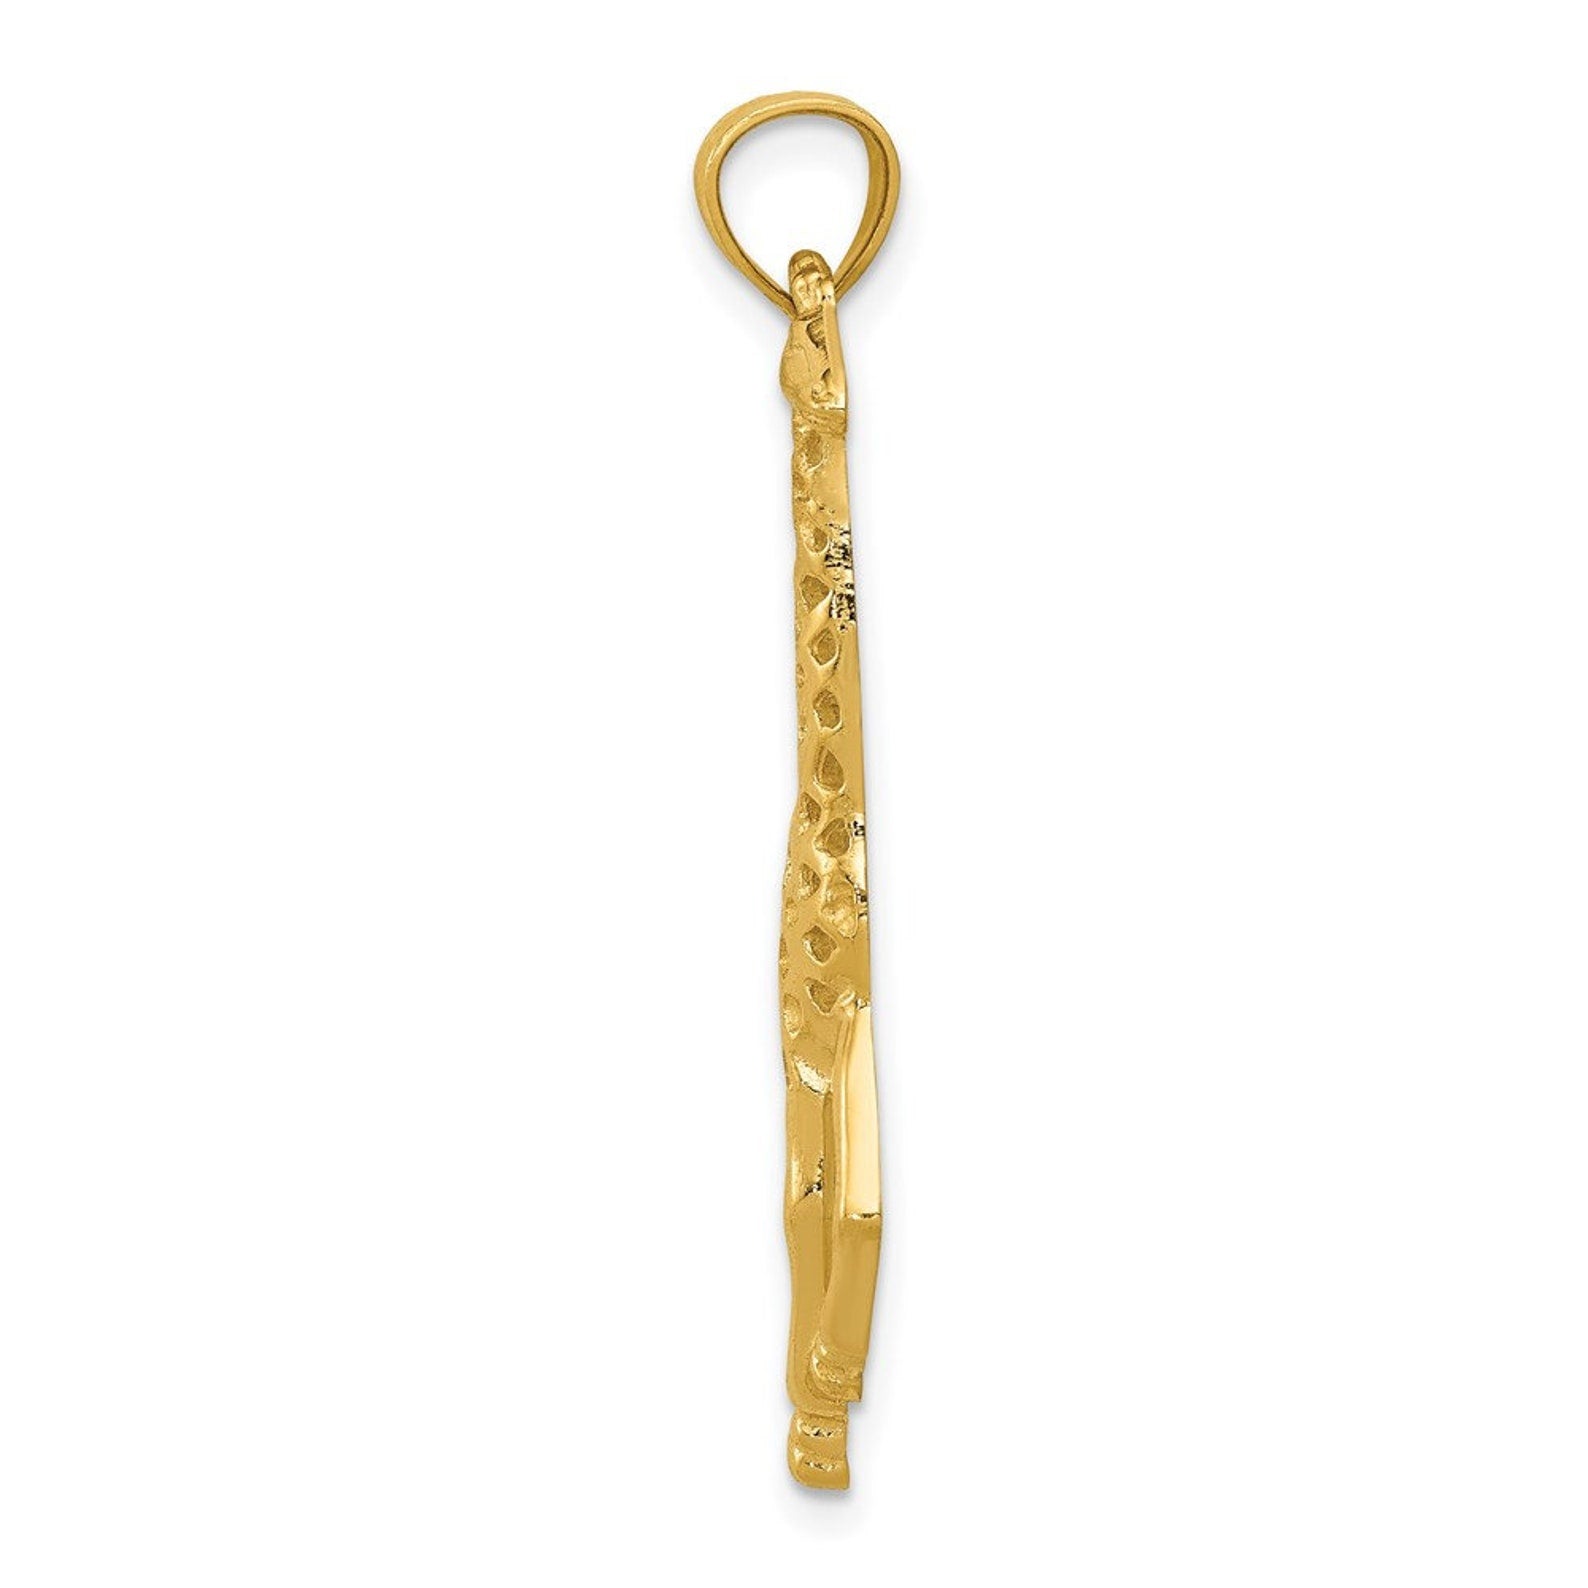 Gold Giraffe Pendant Model-C3530 - Charlie & Co. Jewelry